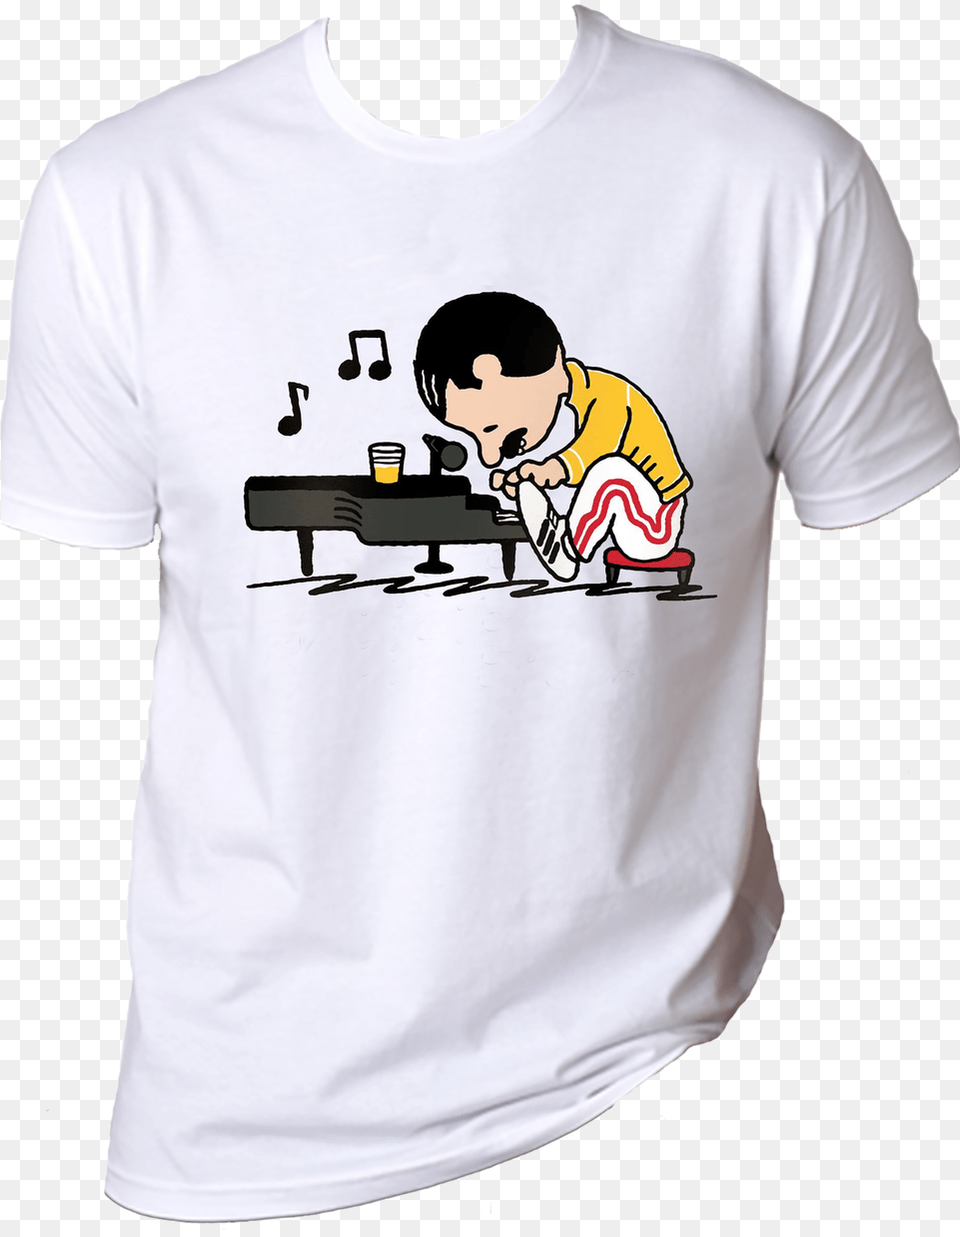 Queen Freddie Mercury Schroeder Cartoon Charlie Brown Freddie Mercury Shirt, Clothing, T-shirt, Weapon, Firearm Png